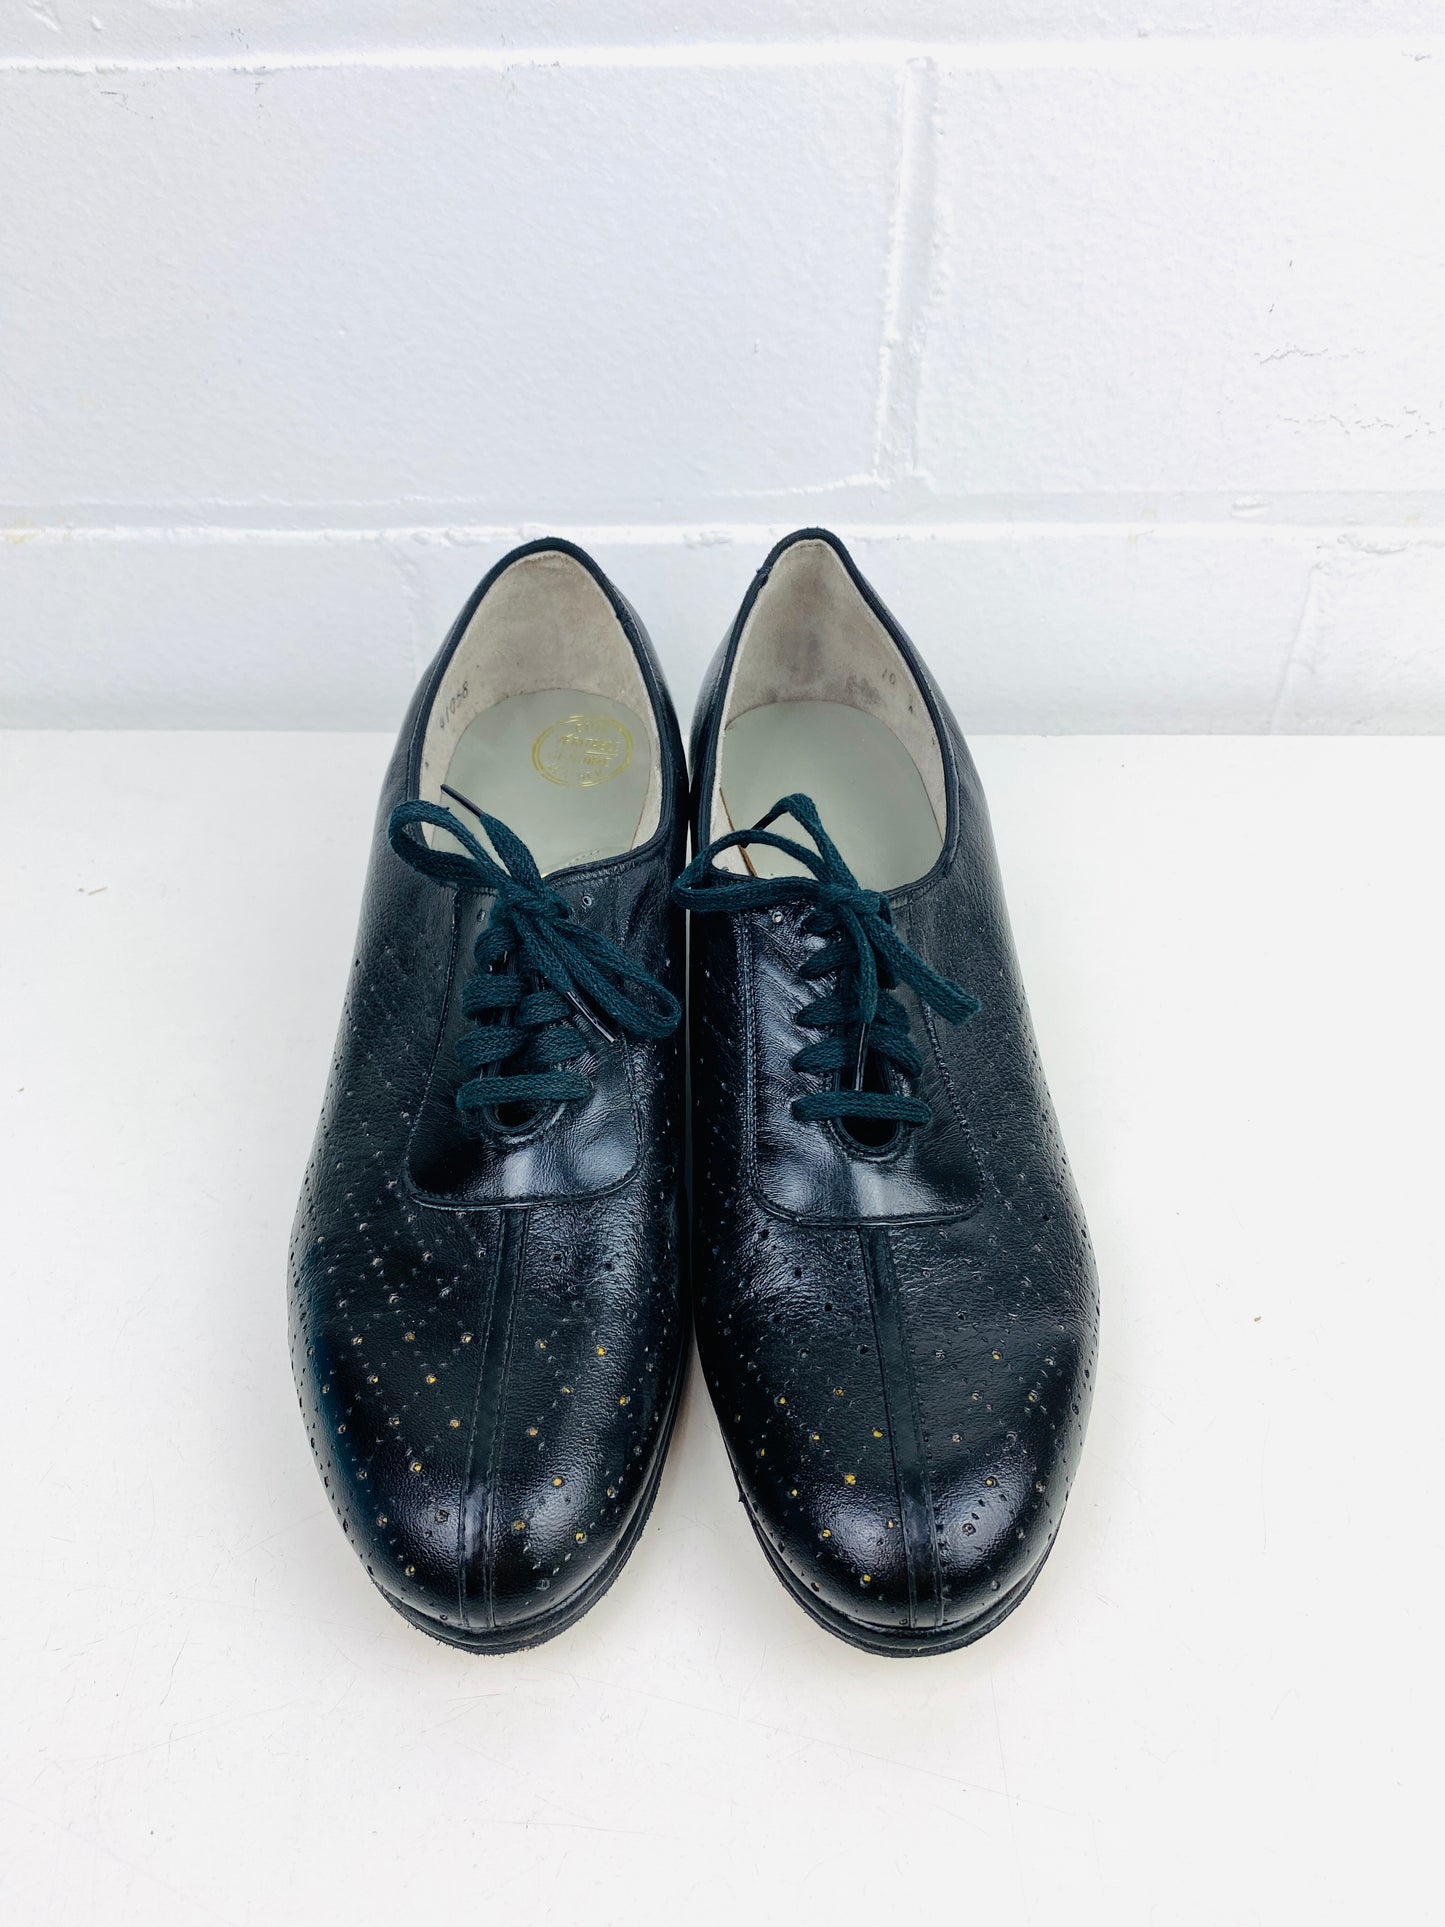 Vintage Deadstock Shoes, Women's 1980s Black Leather Oxford's, Cuban Heels, NOS